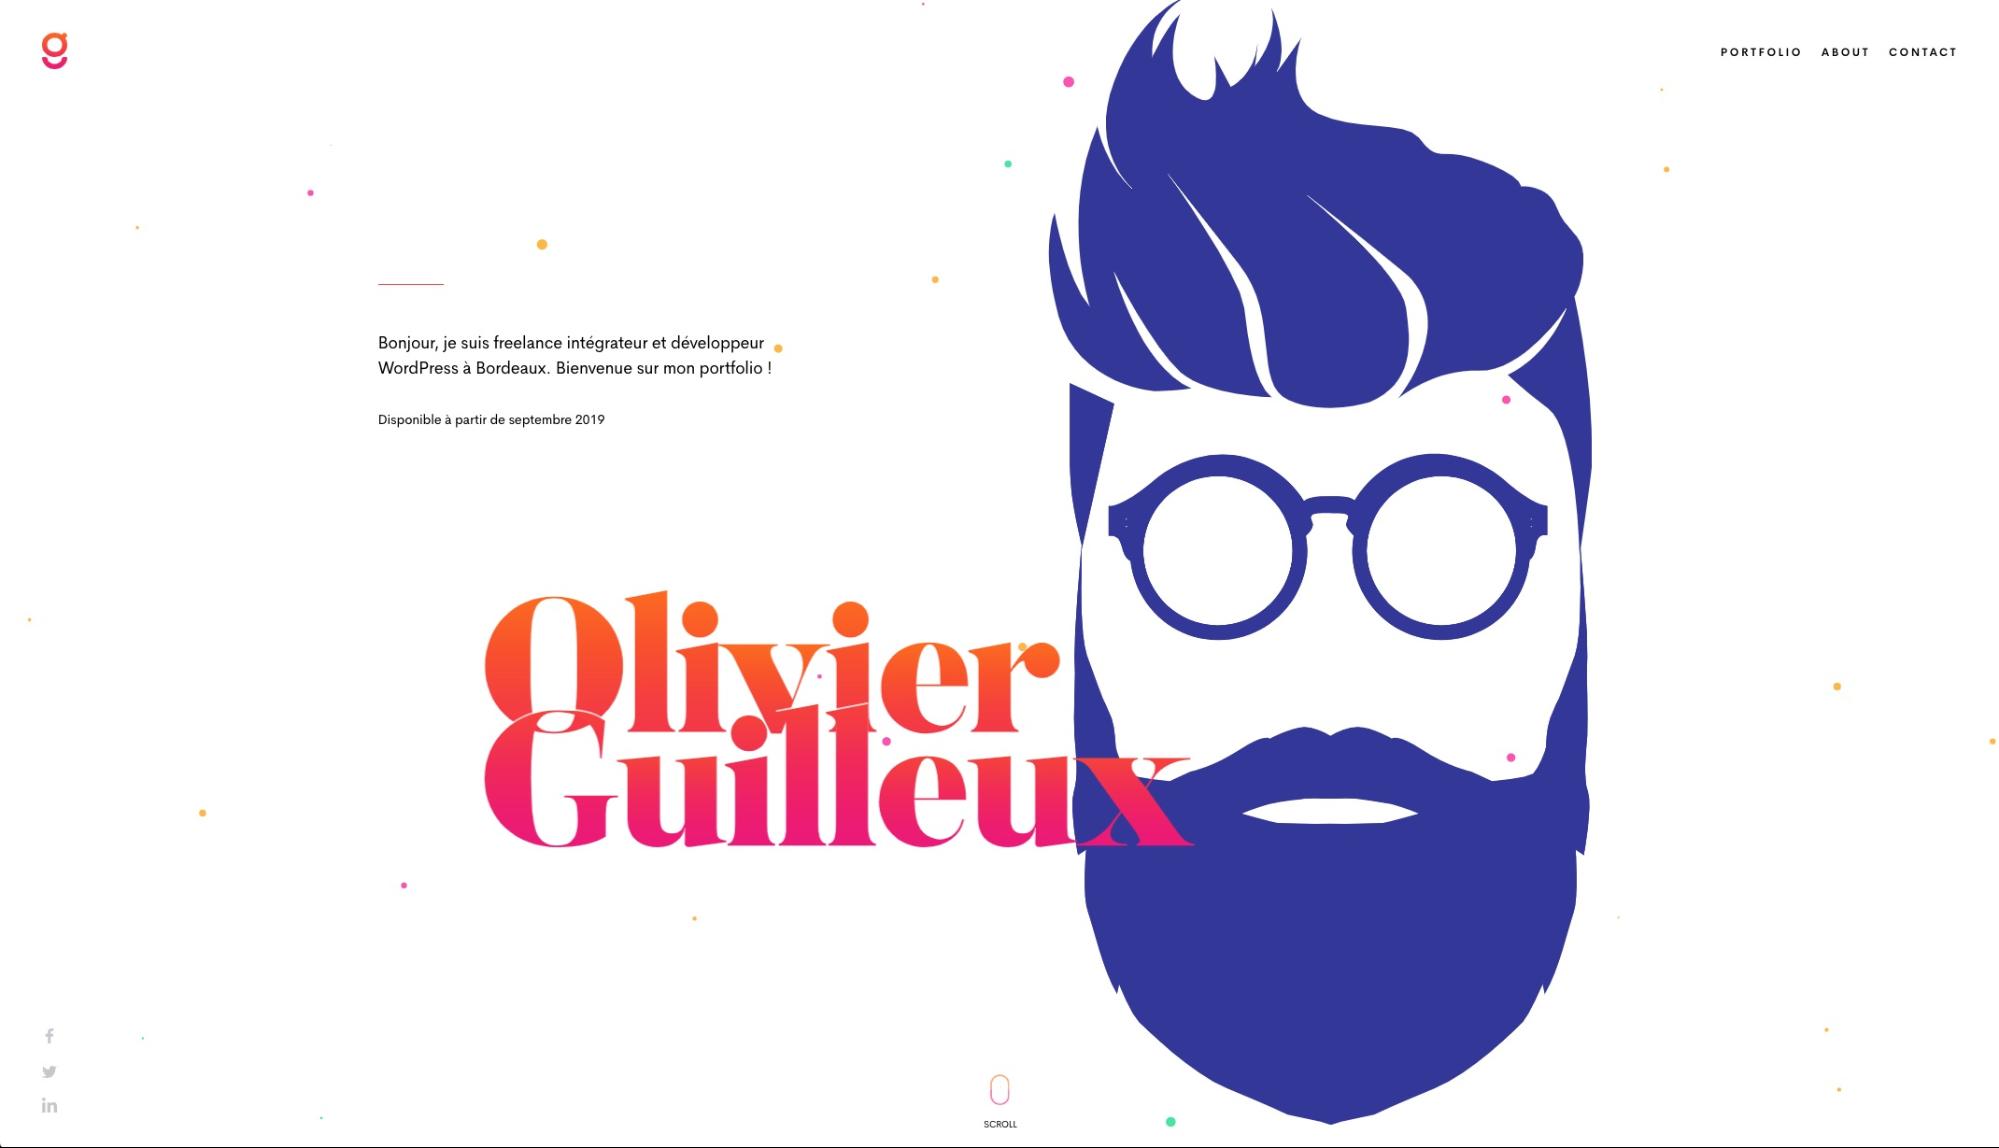 web design portfolio examples: olivier guilleux